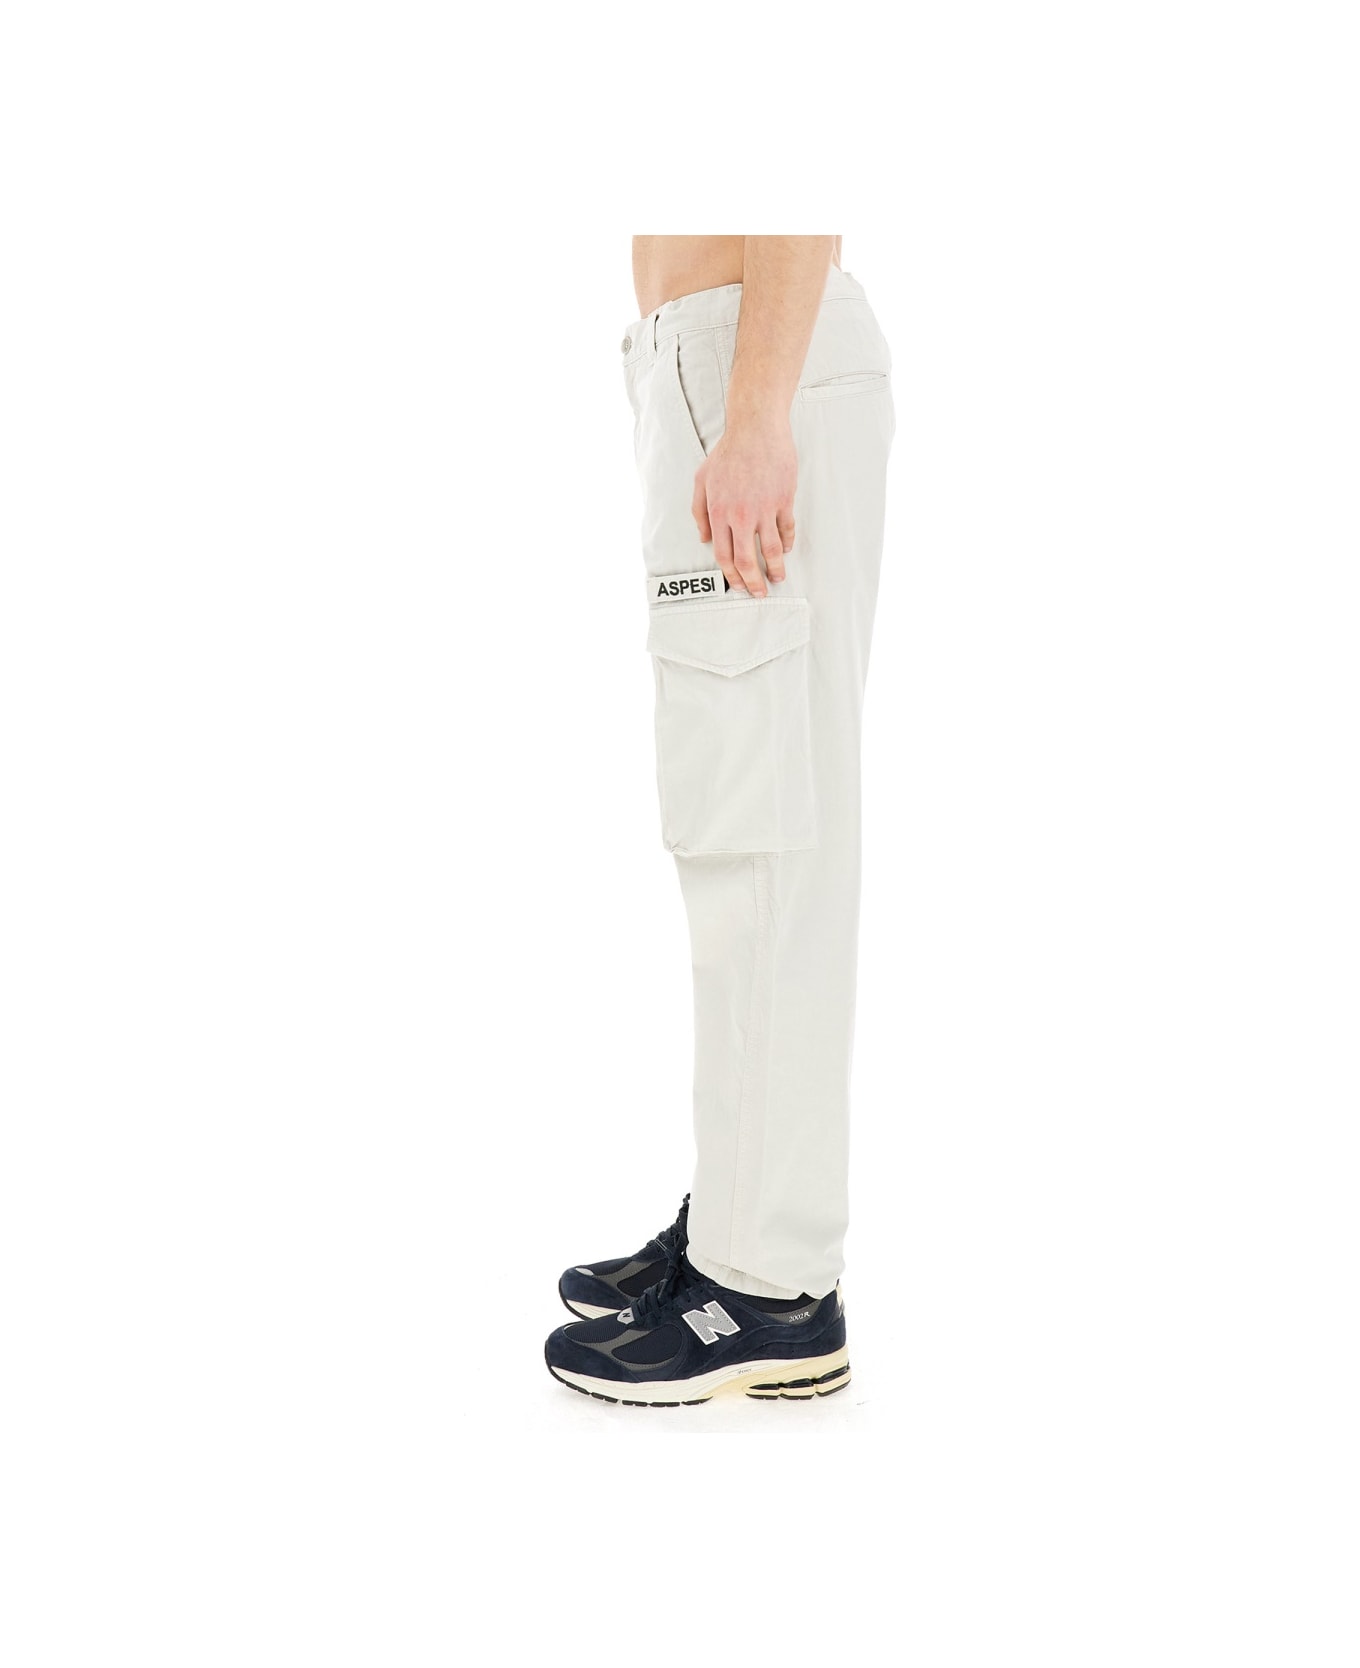 Aspesi Cotton Pants - BEIGE